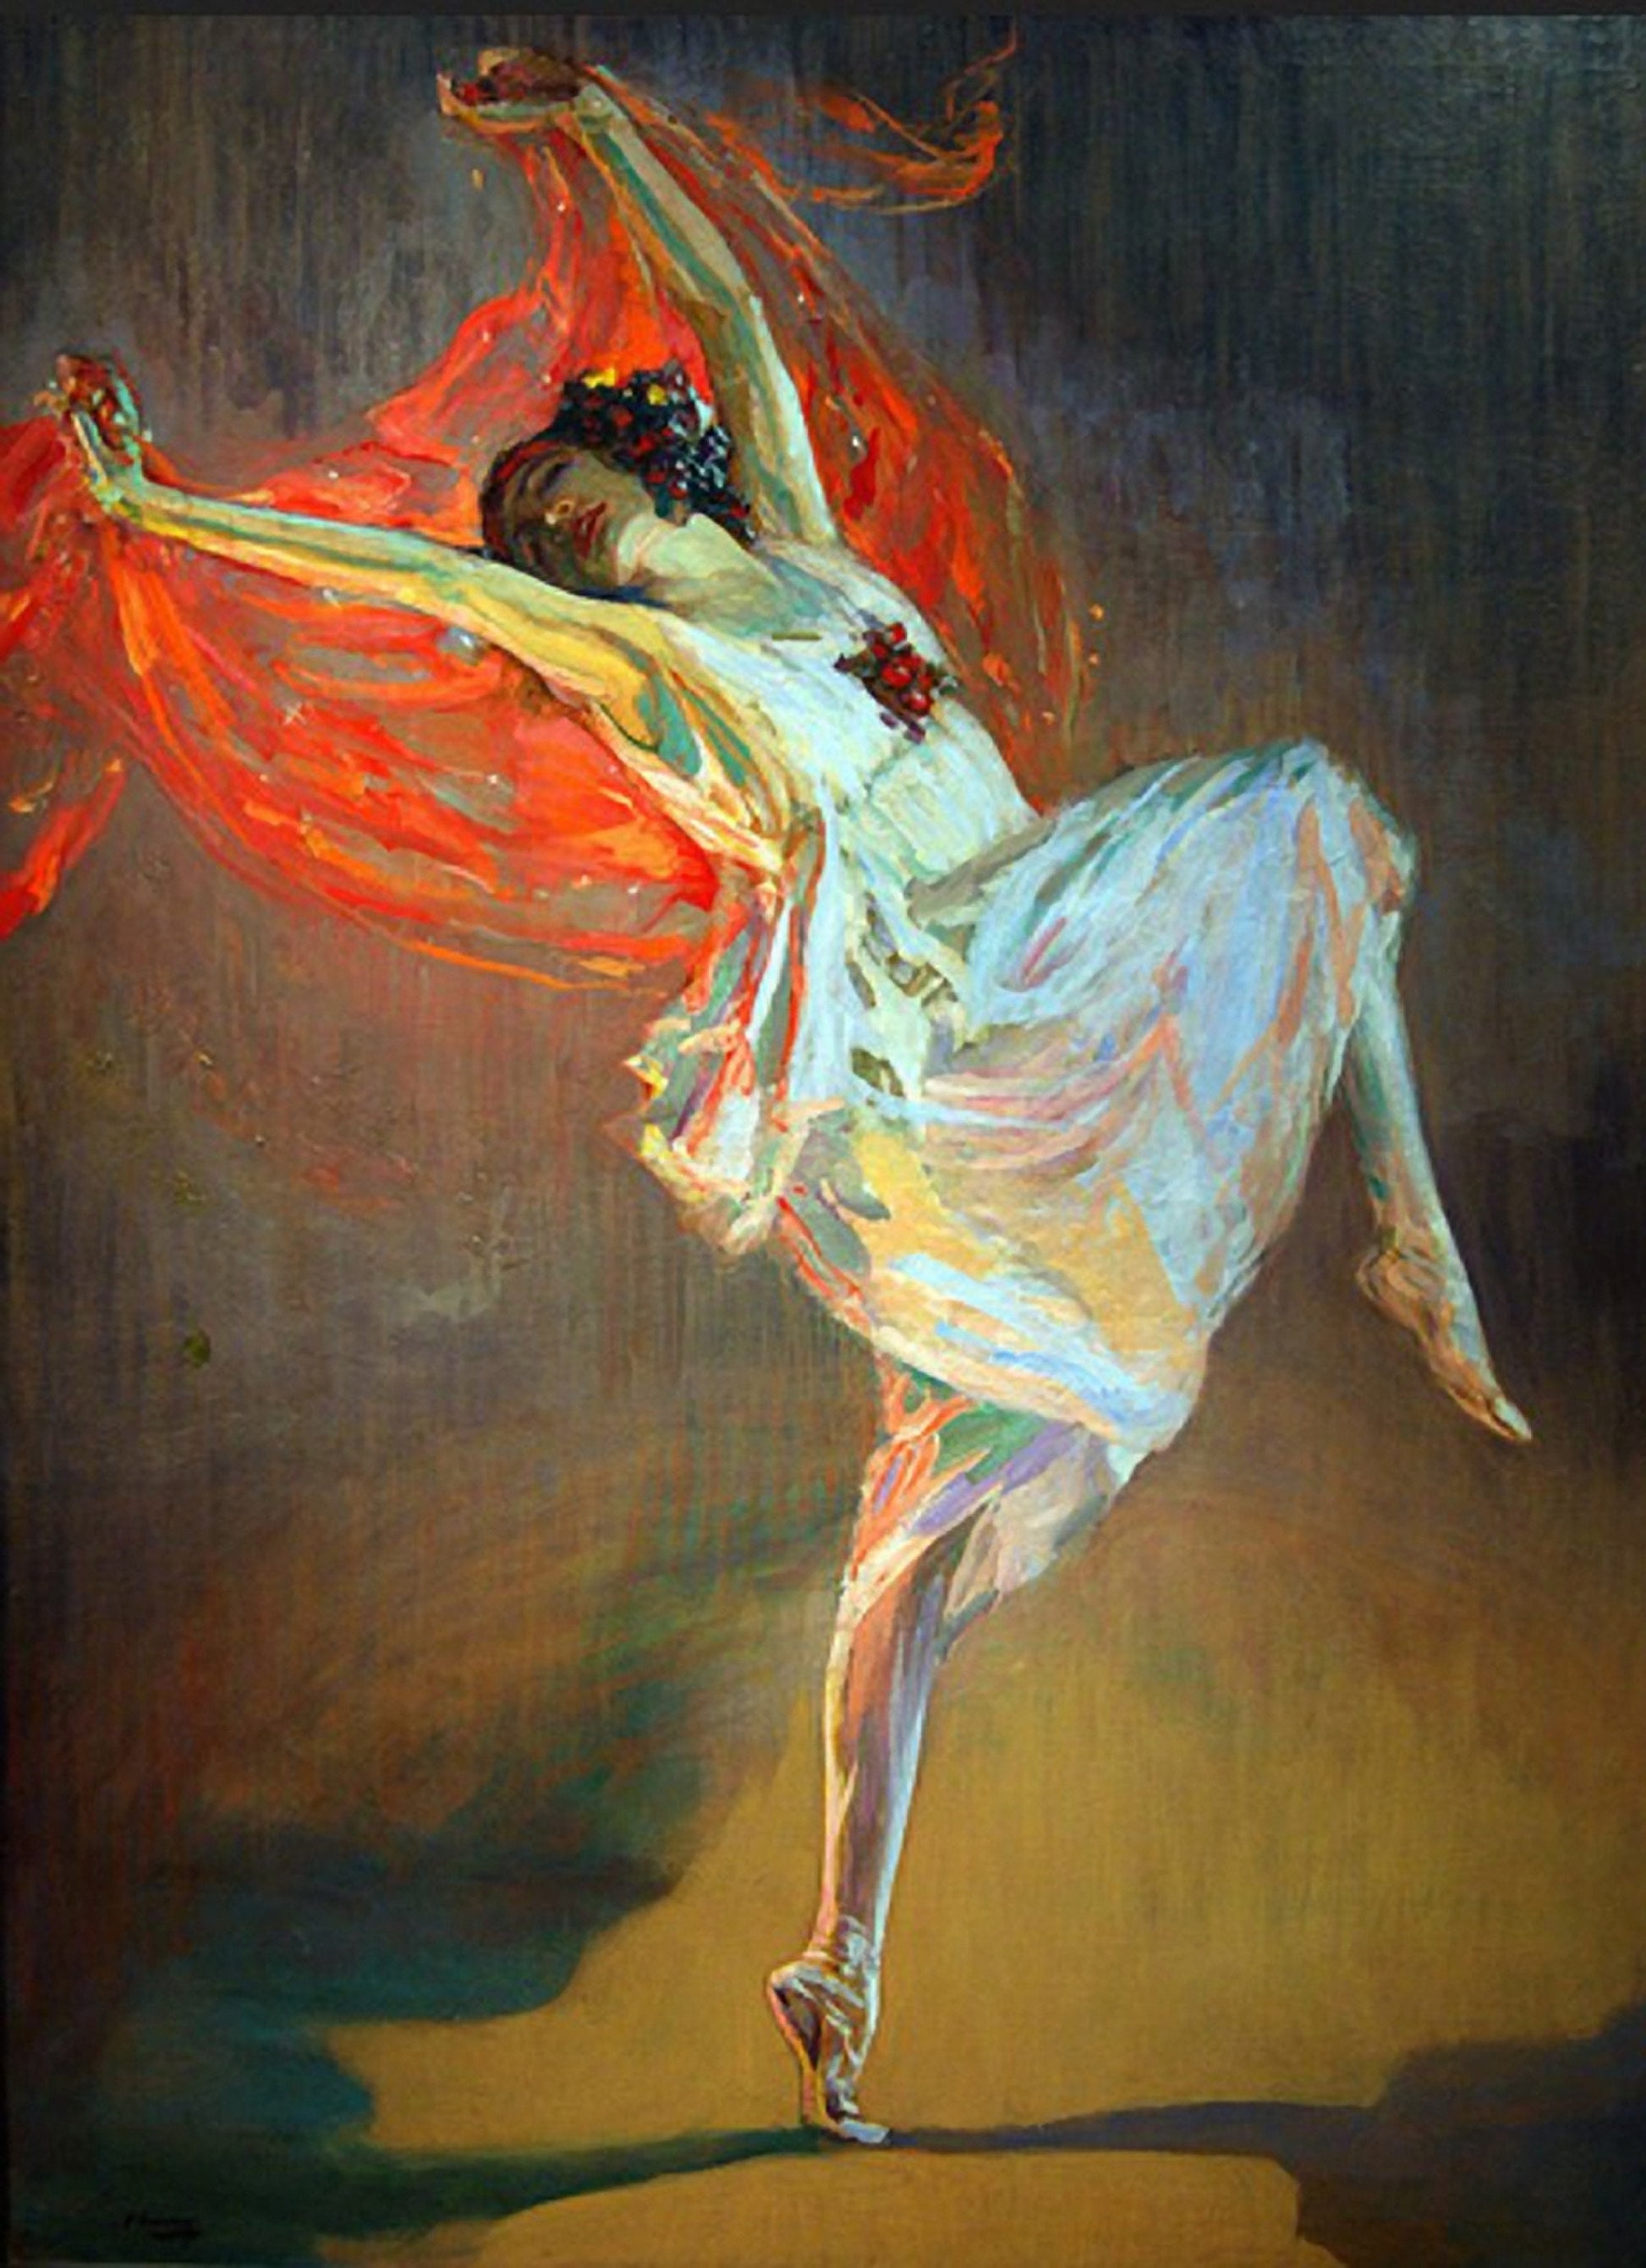 "Anna Pavlova" (1900s) painting | John Lavery prints Posters, Prints, & Visual Artwork The Trumpet Shop   